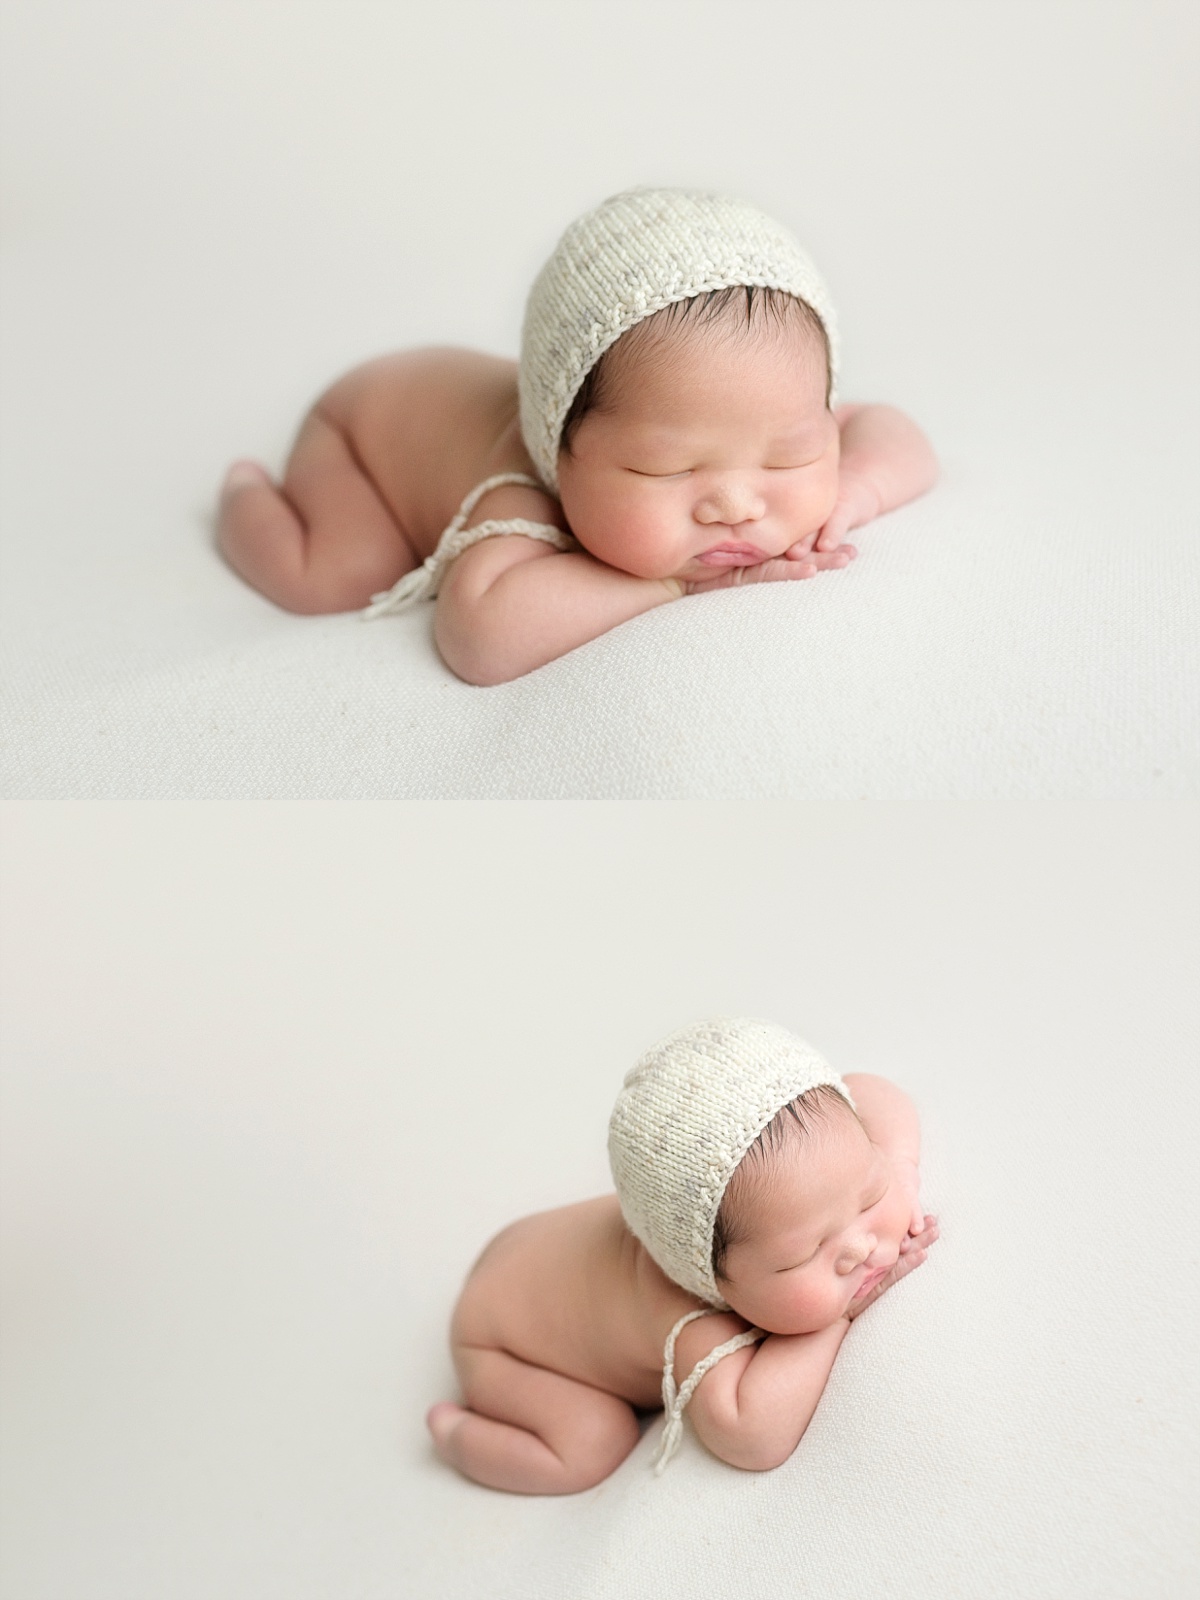 Central Texas newborn photography